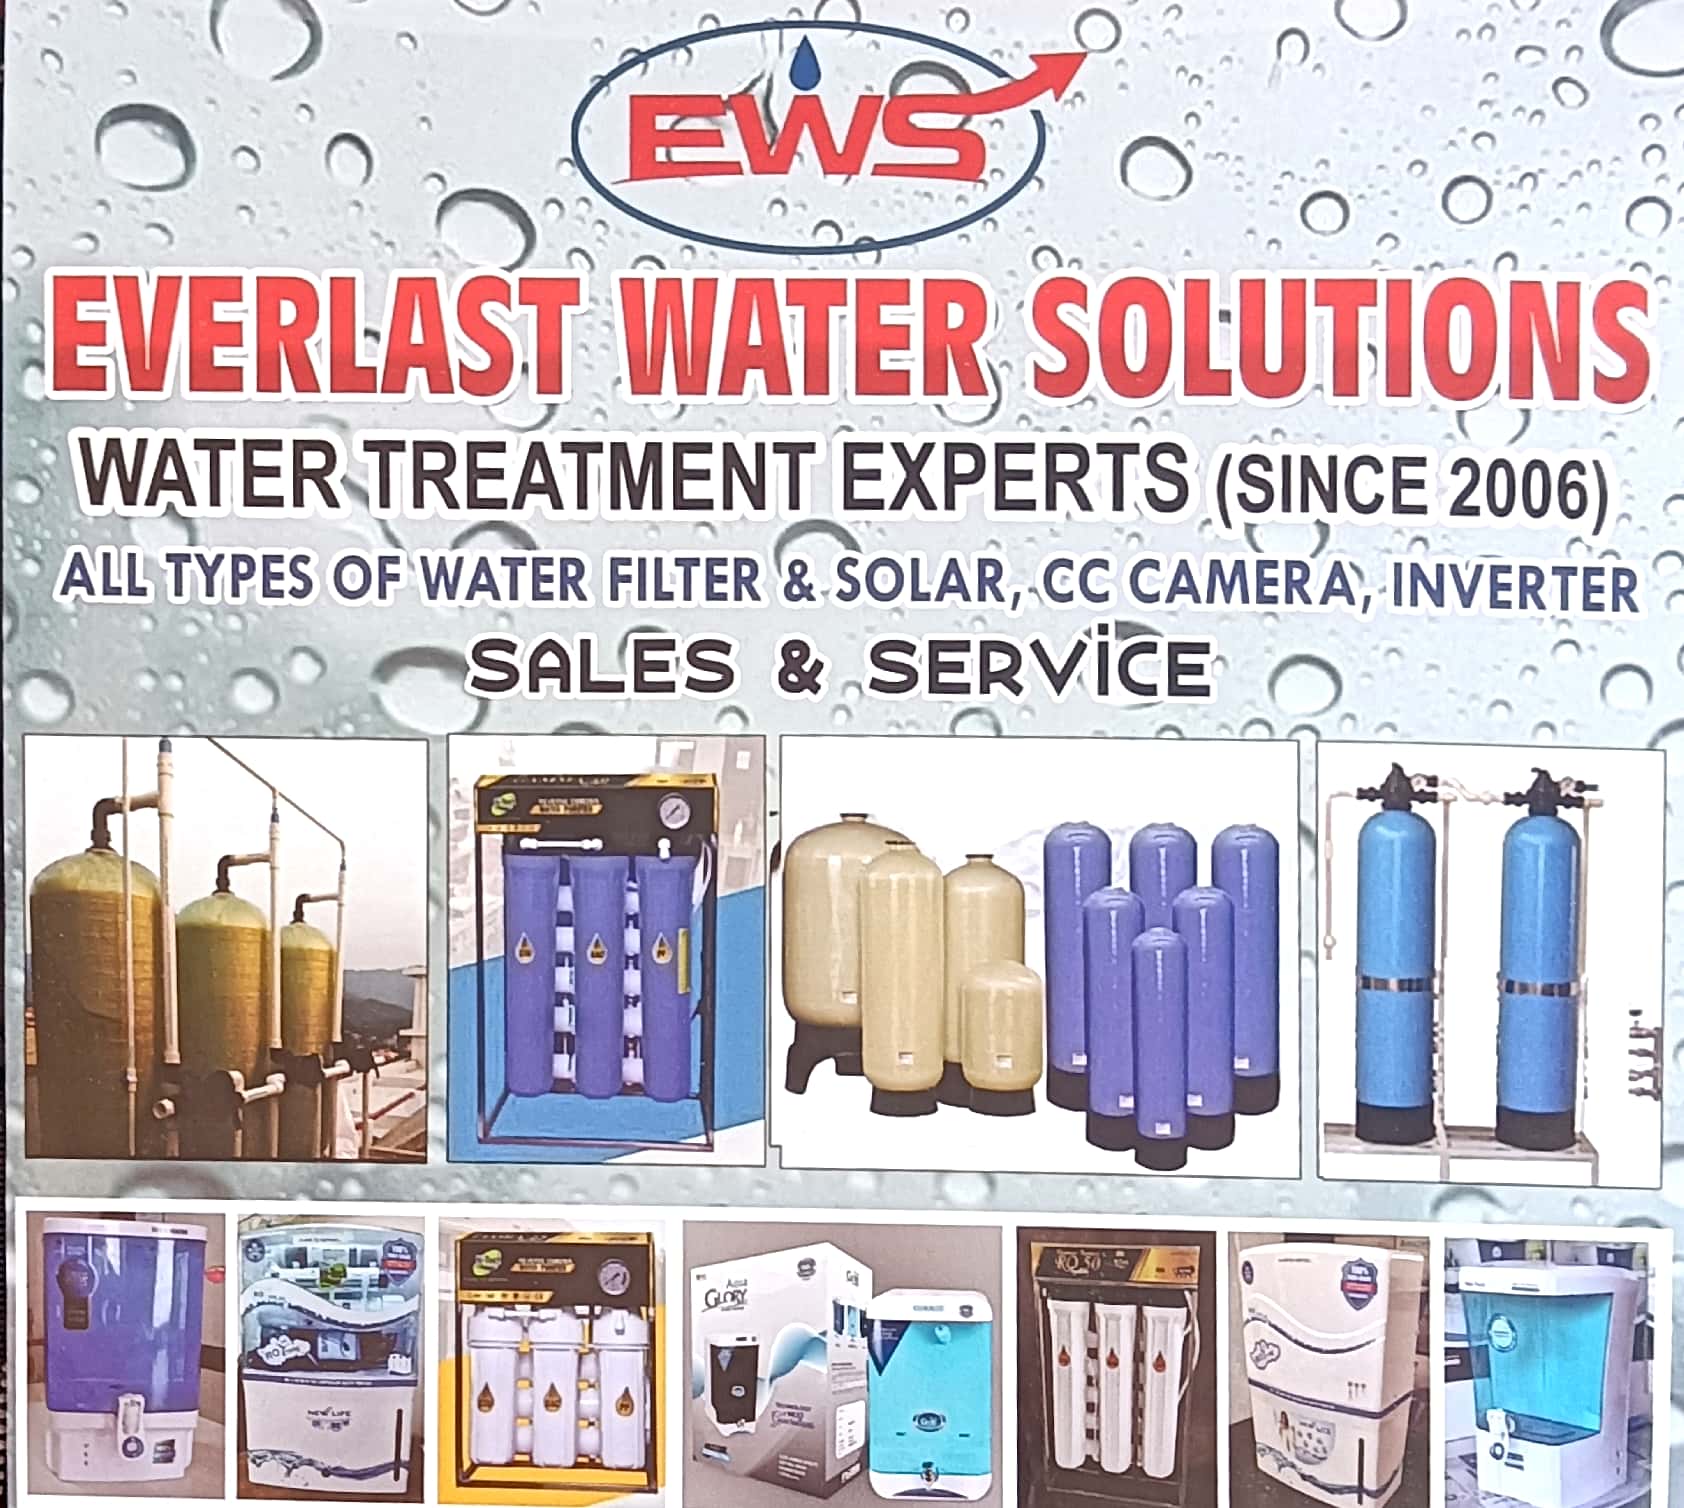 EVERLAST WATER SOLUTIONS